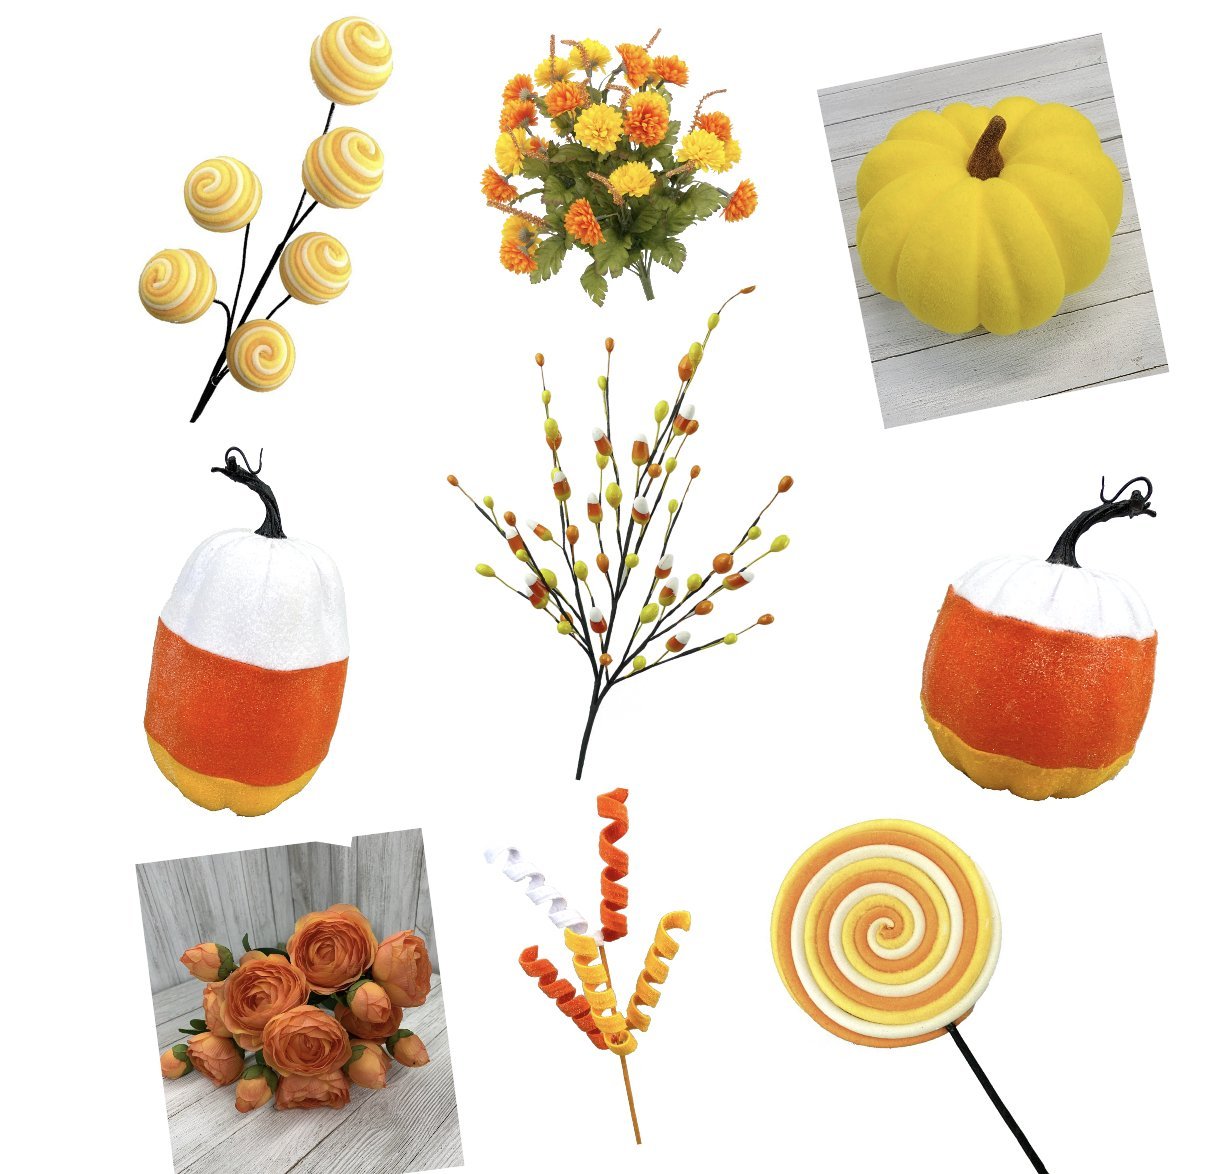 Candy corn orange and yellow pumpkin - 7” - Greenery Market Picks